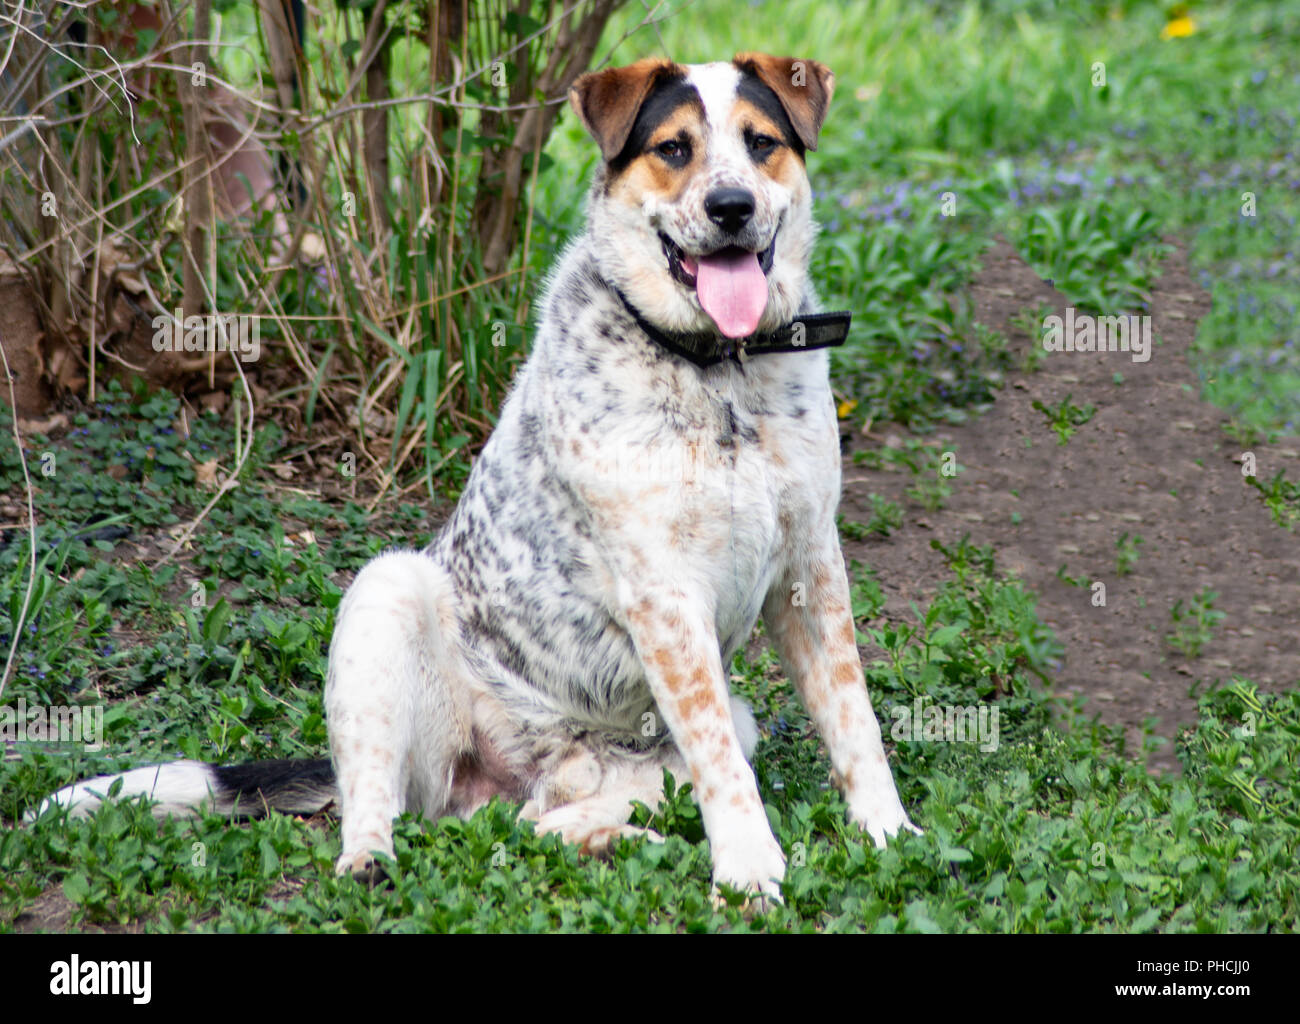 dog mix hi-res stock photography images - Alamy